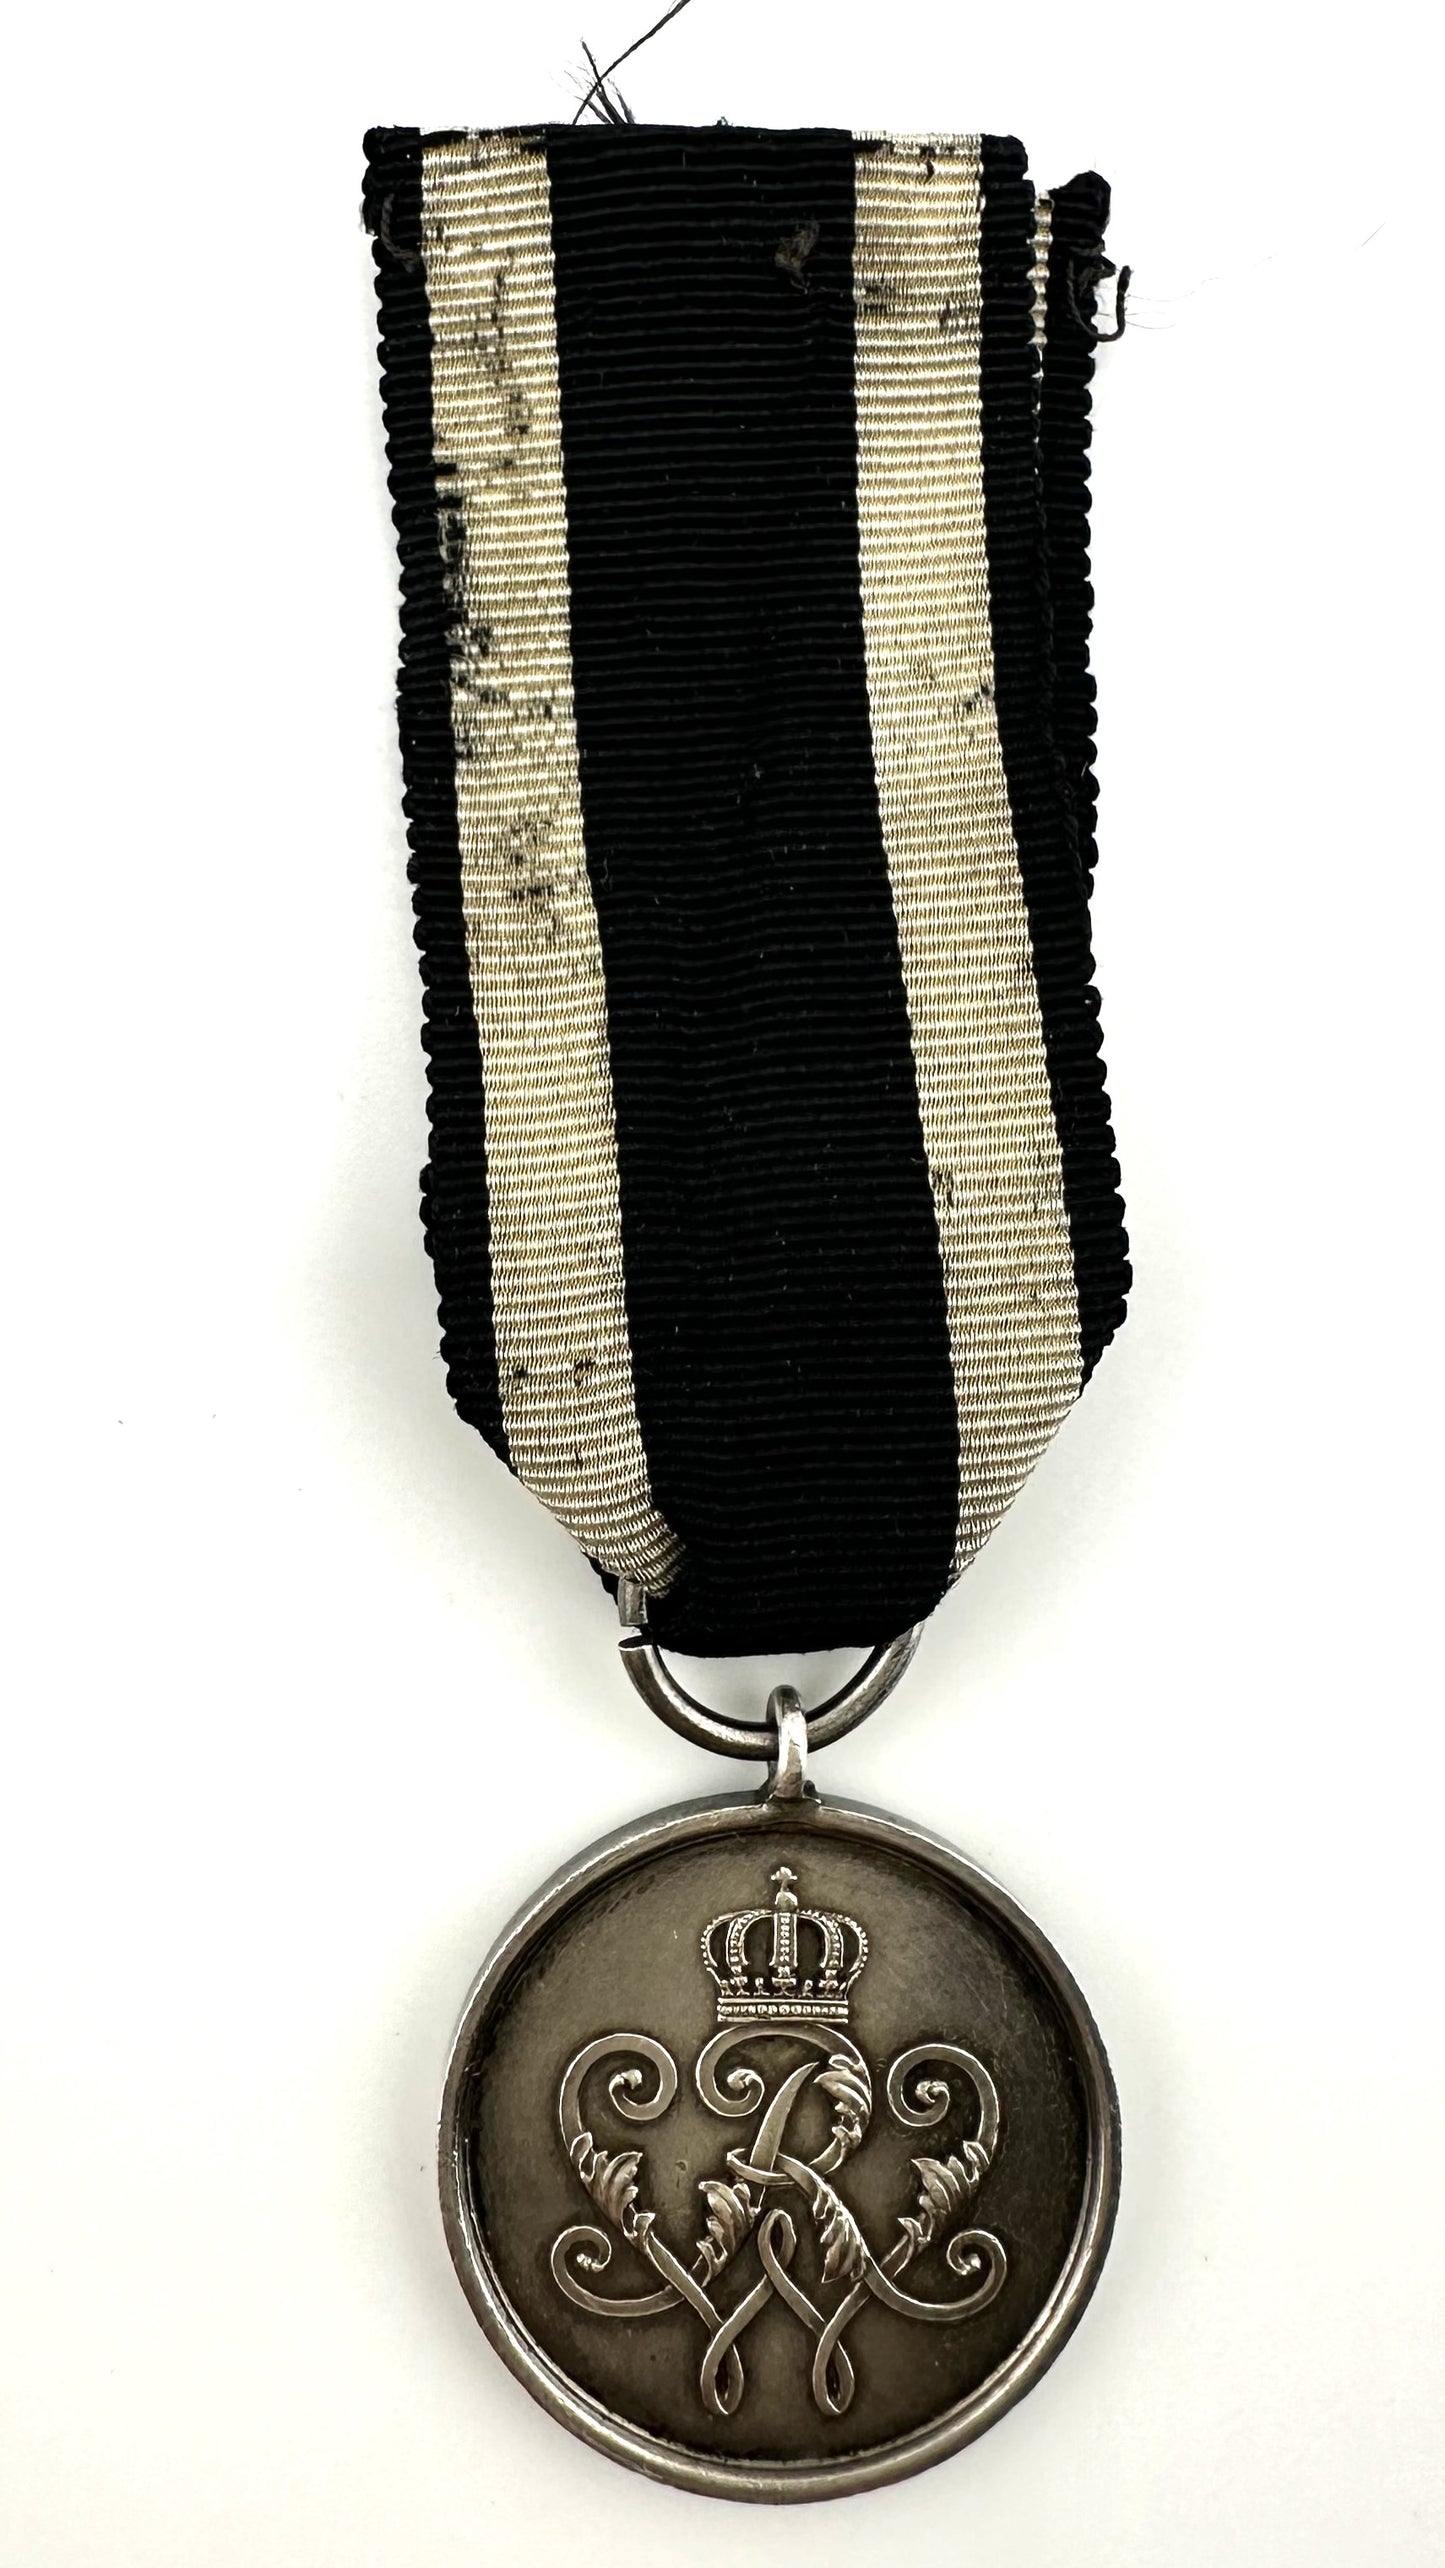 Prussian Krieger Verdienst (War Service) Medal - Derrittmeister Militaria Group